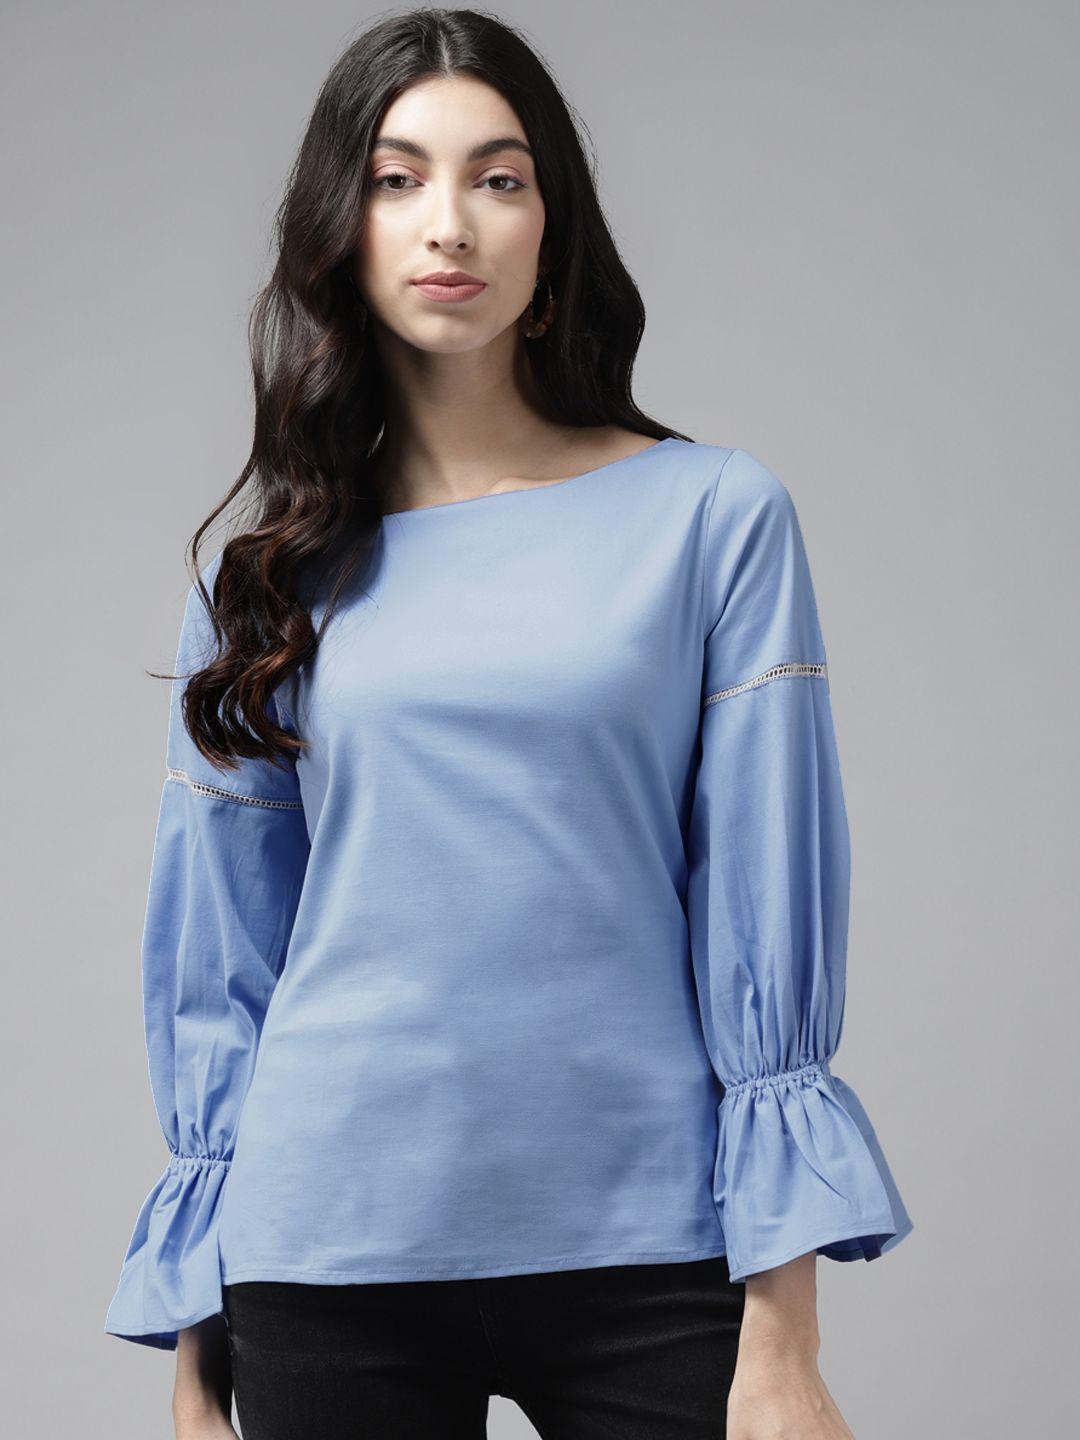 cayman blue bell sleeves pure cotton regular top